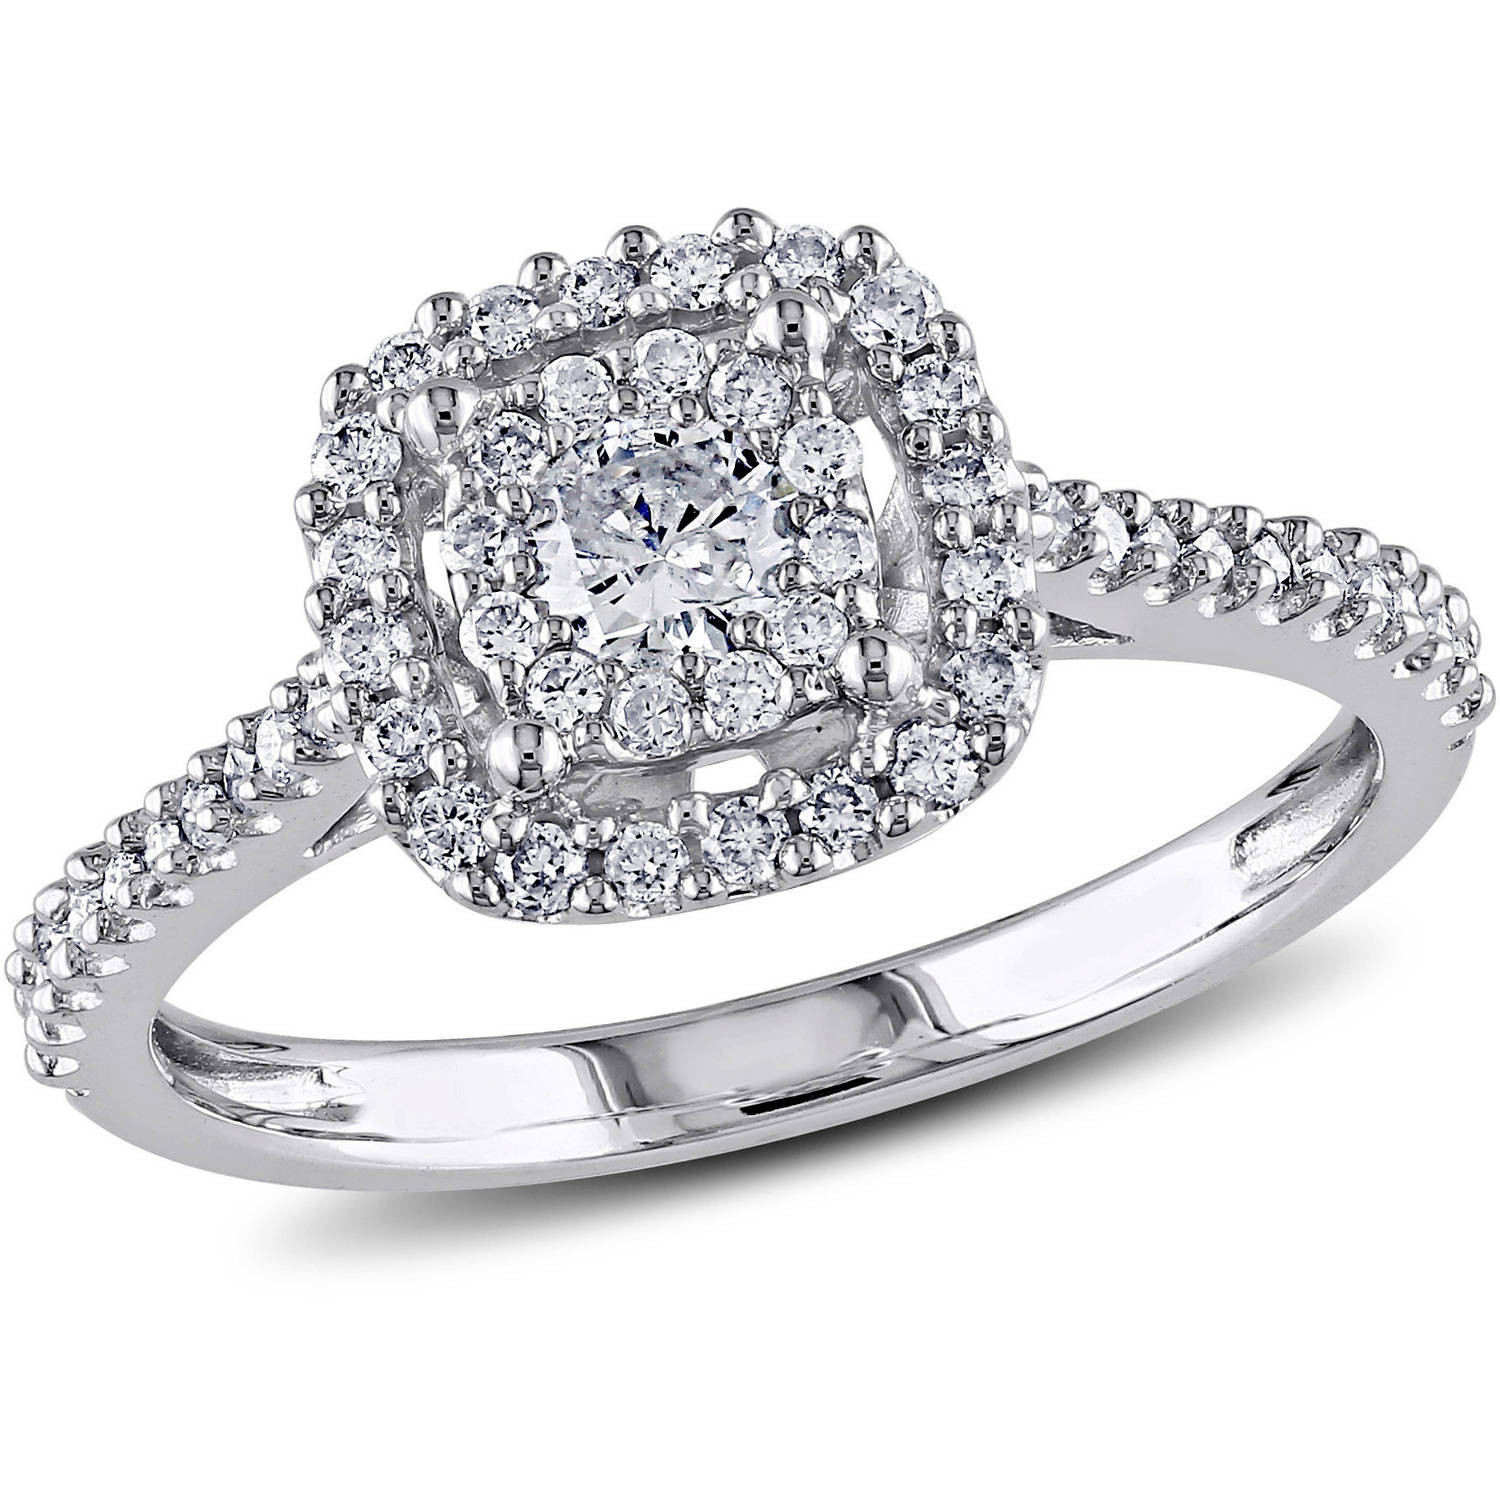 Diamond Rings At Walmart
 Miabella 1 2 Carat T W Certified Diamond 10kt White